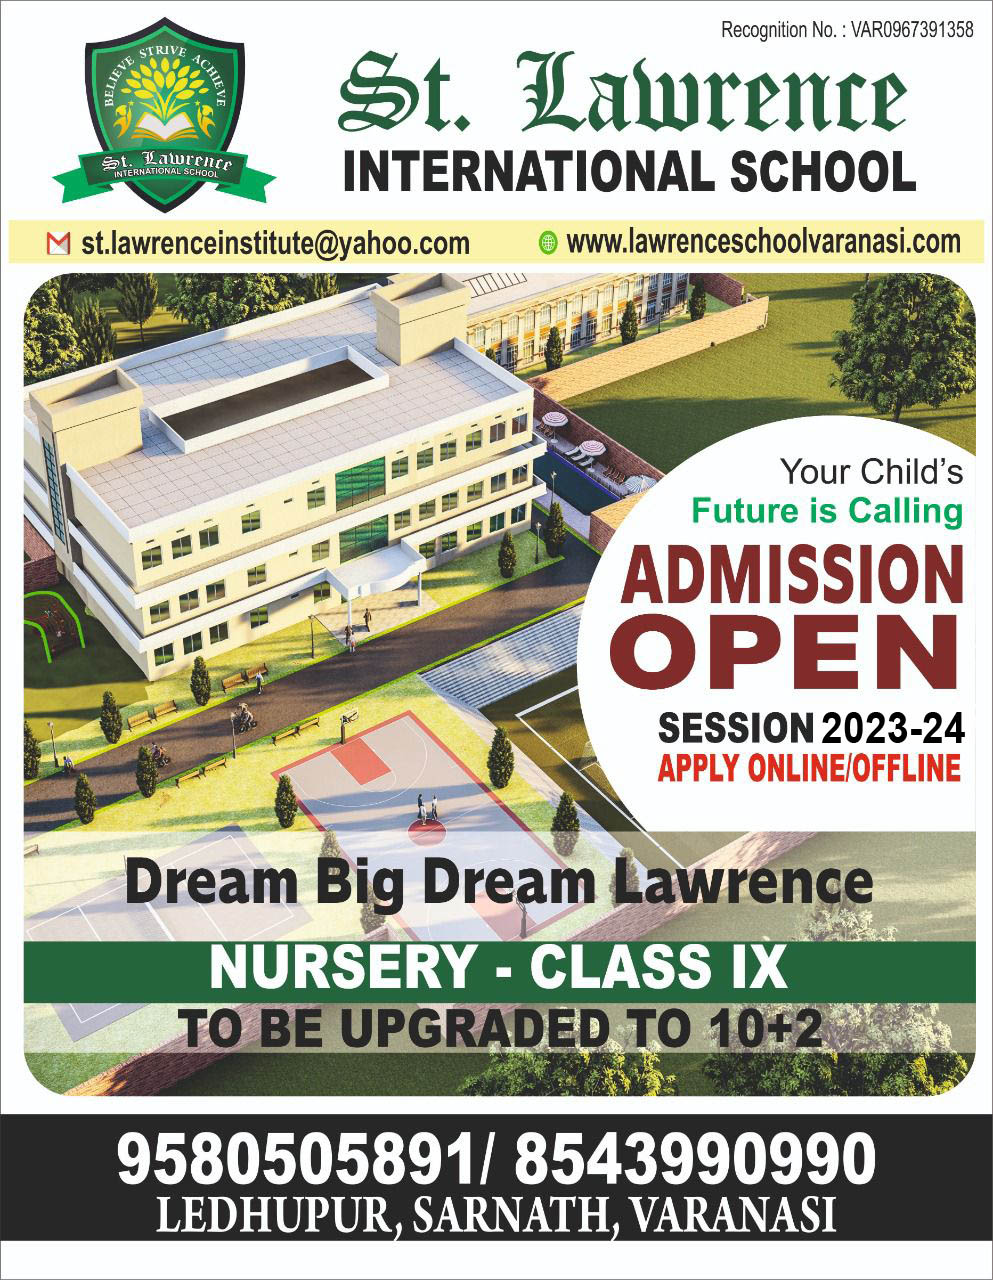 ST. LAWRENCE INTERNATIONAL SCHOOL